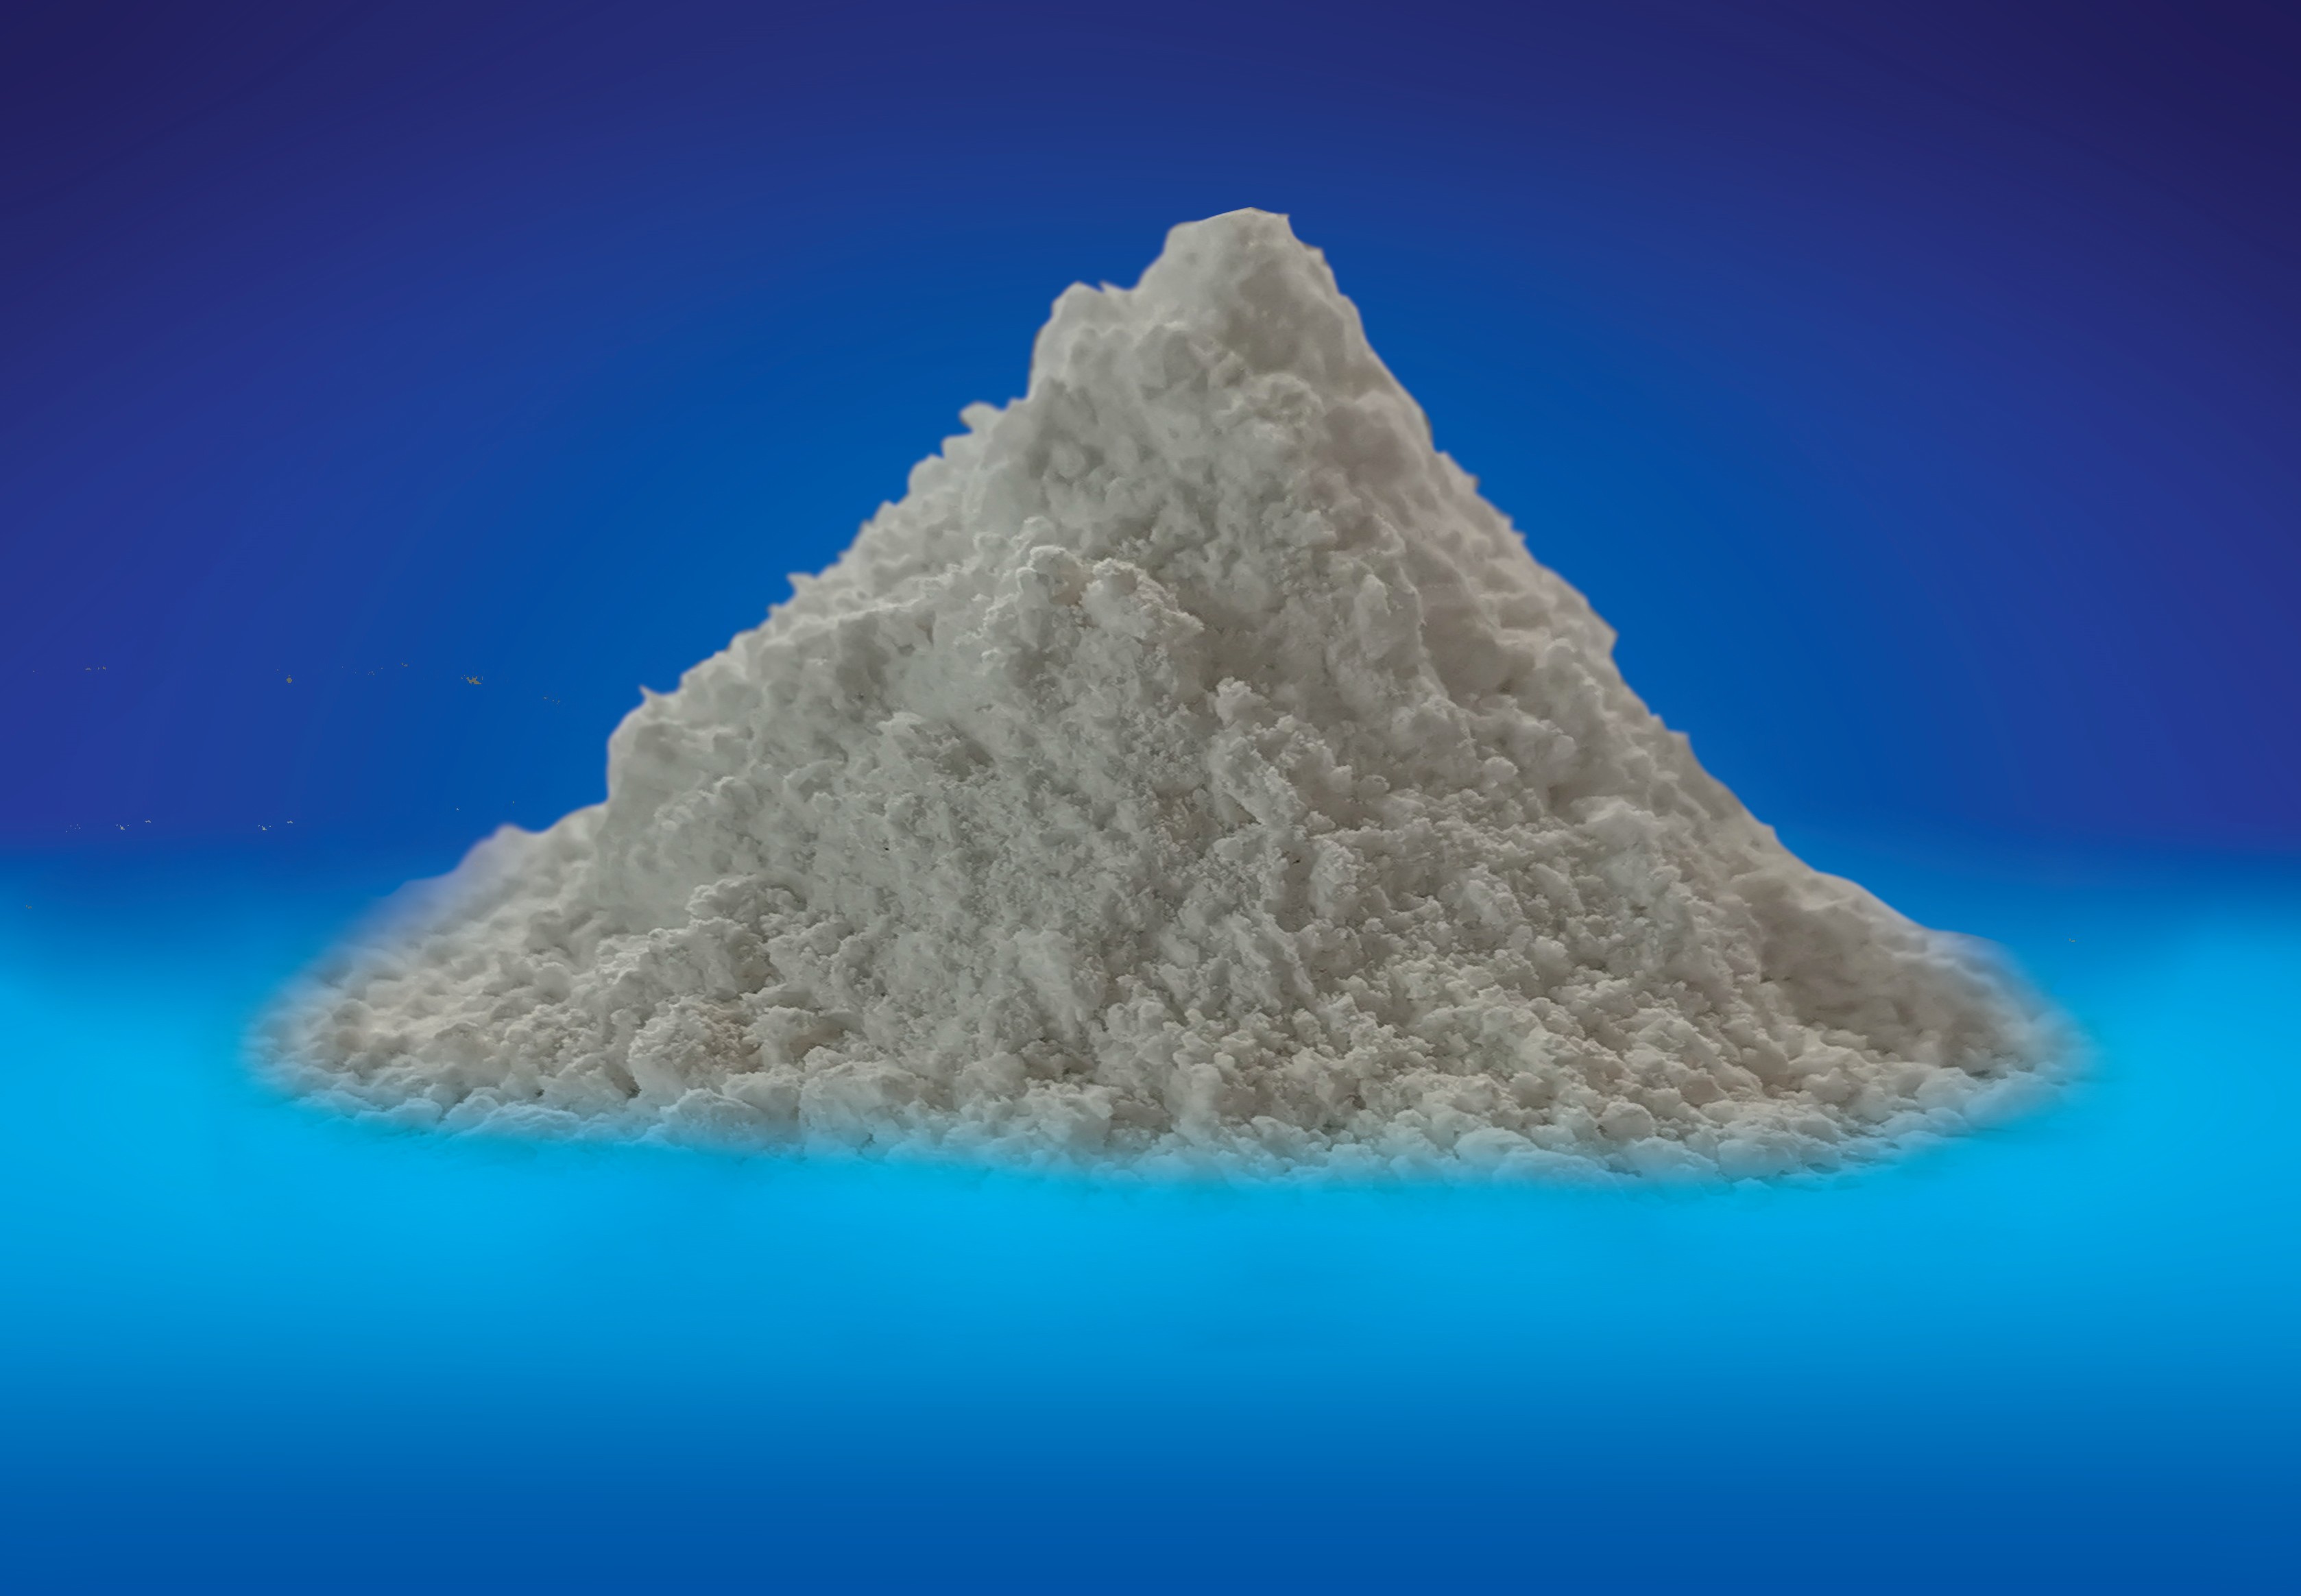 Tetrabasic Zinc Chloride Tribasic zinc chloride TBZC 5